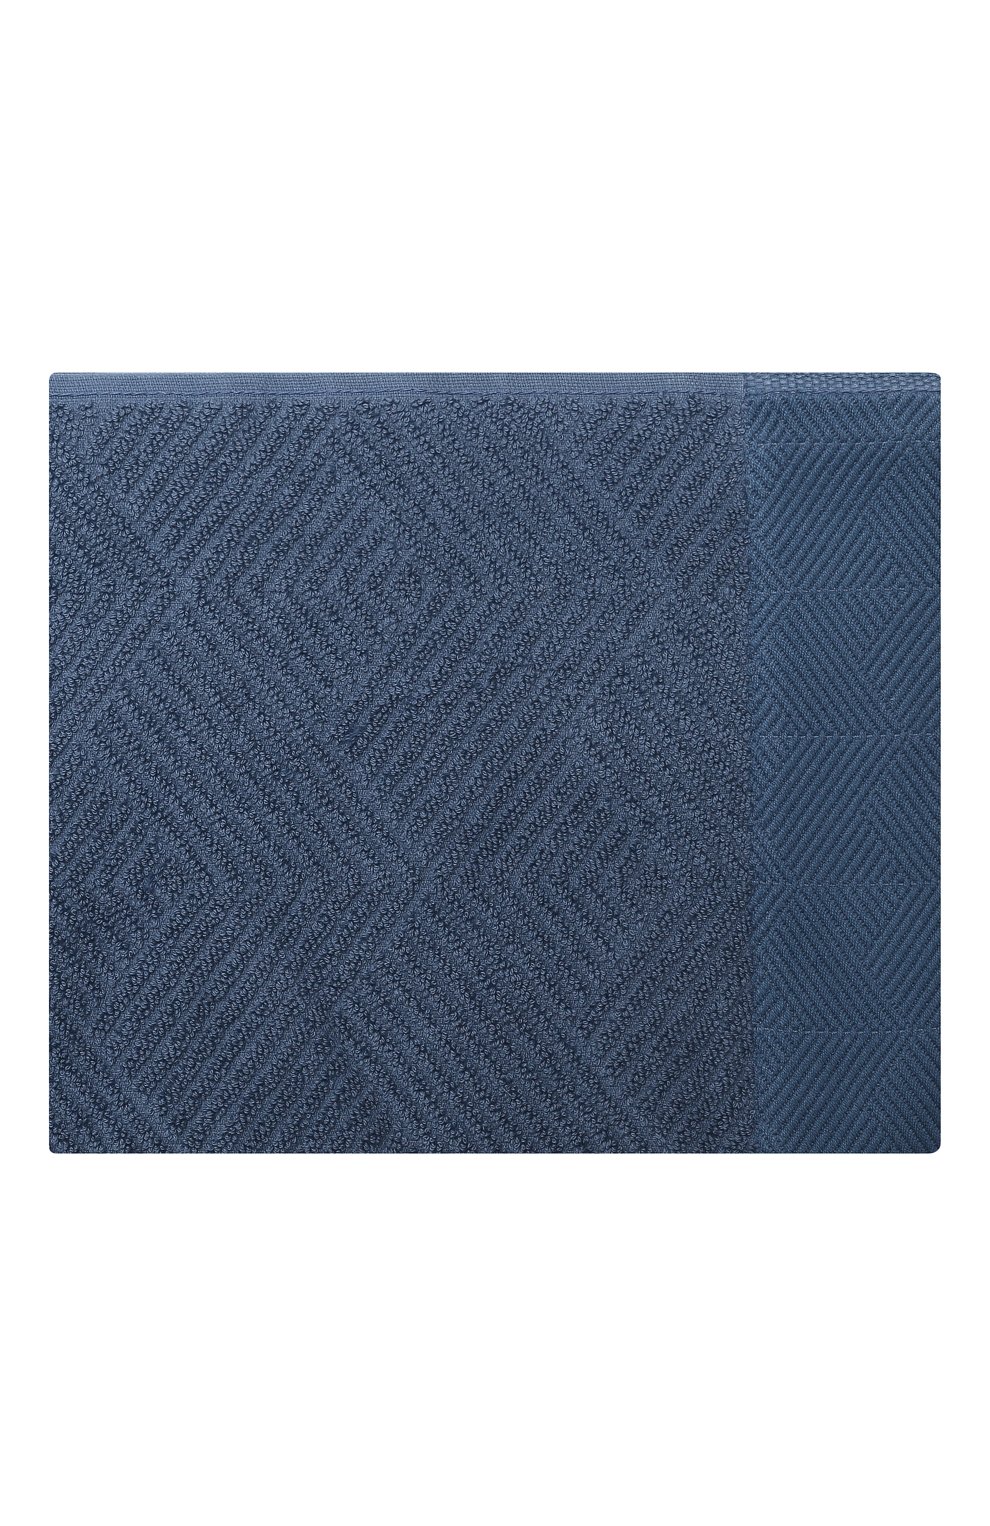 Хлопковое полотенце FRETTE синего цвета, арт. FR6243 D0100 040C | Фото 1